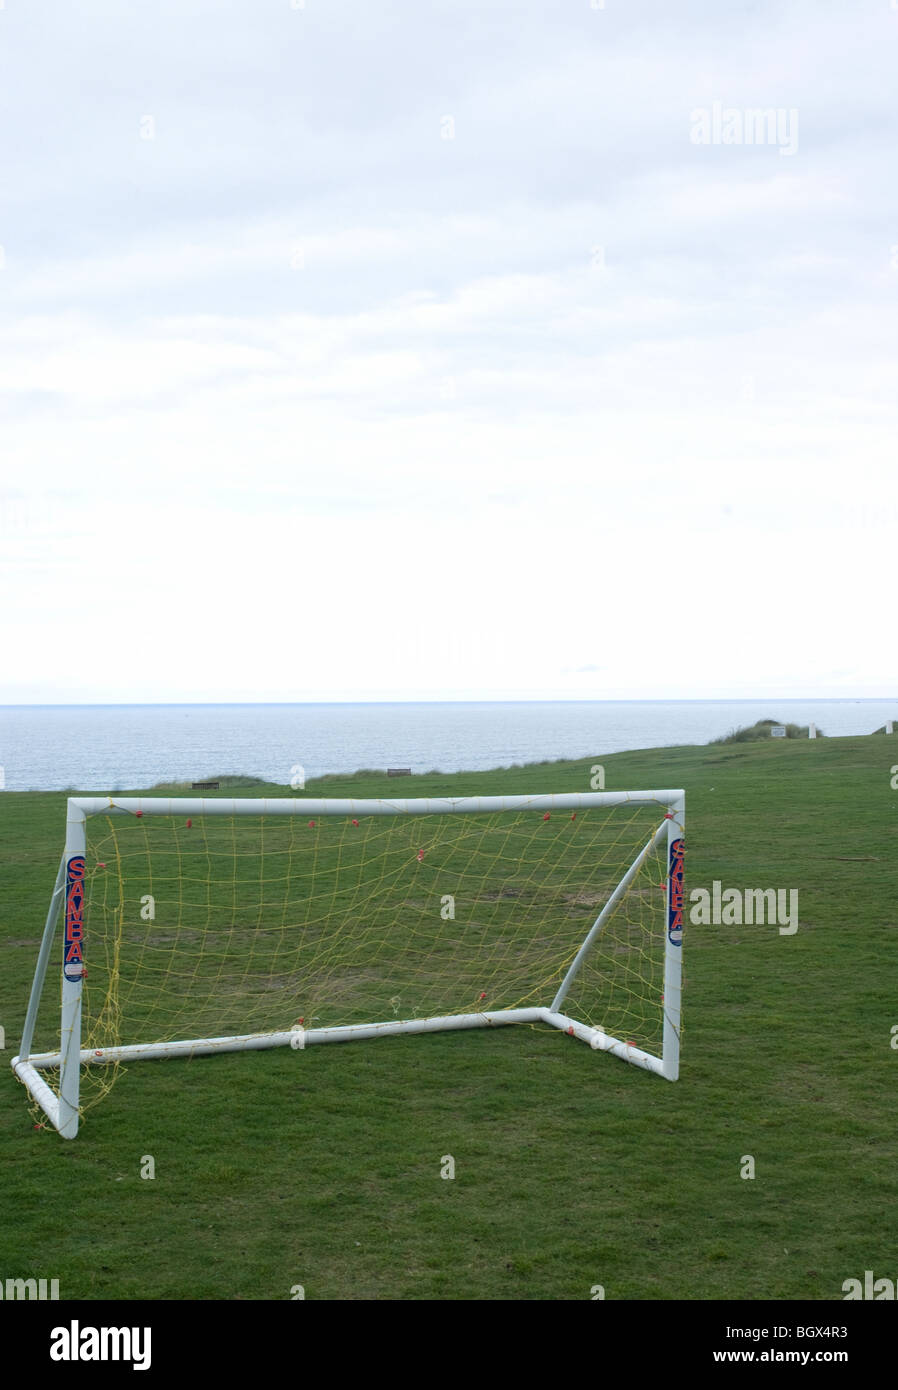 Un poteau de but de football près d'un bord de falaises Banque D'Images